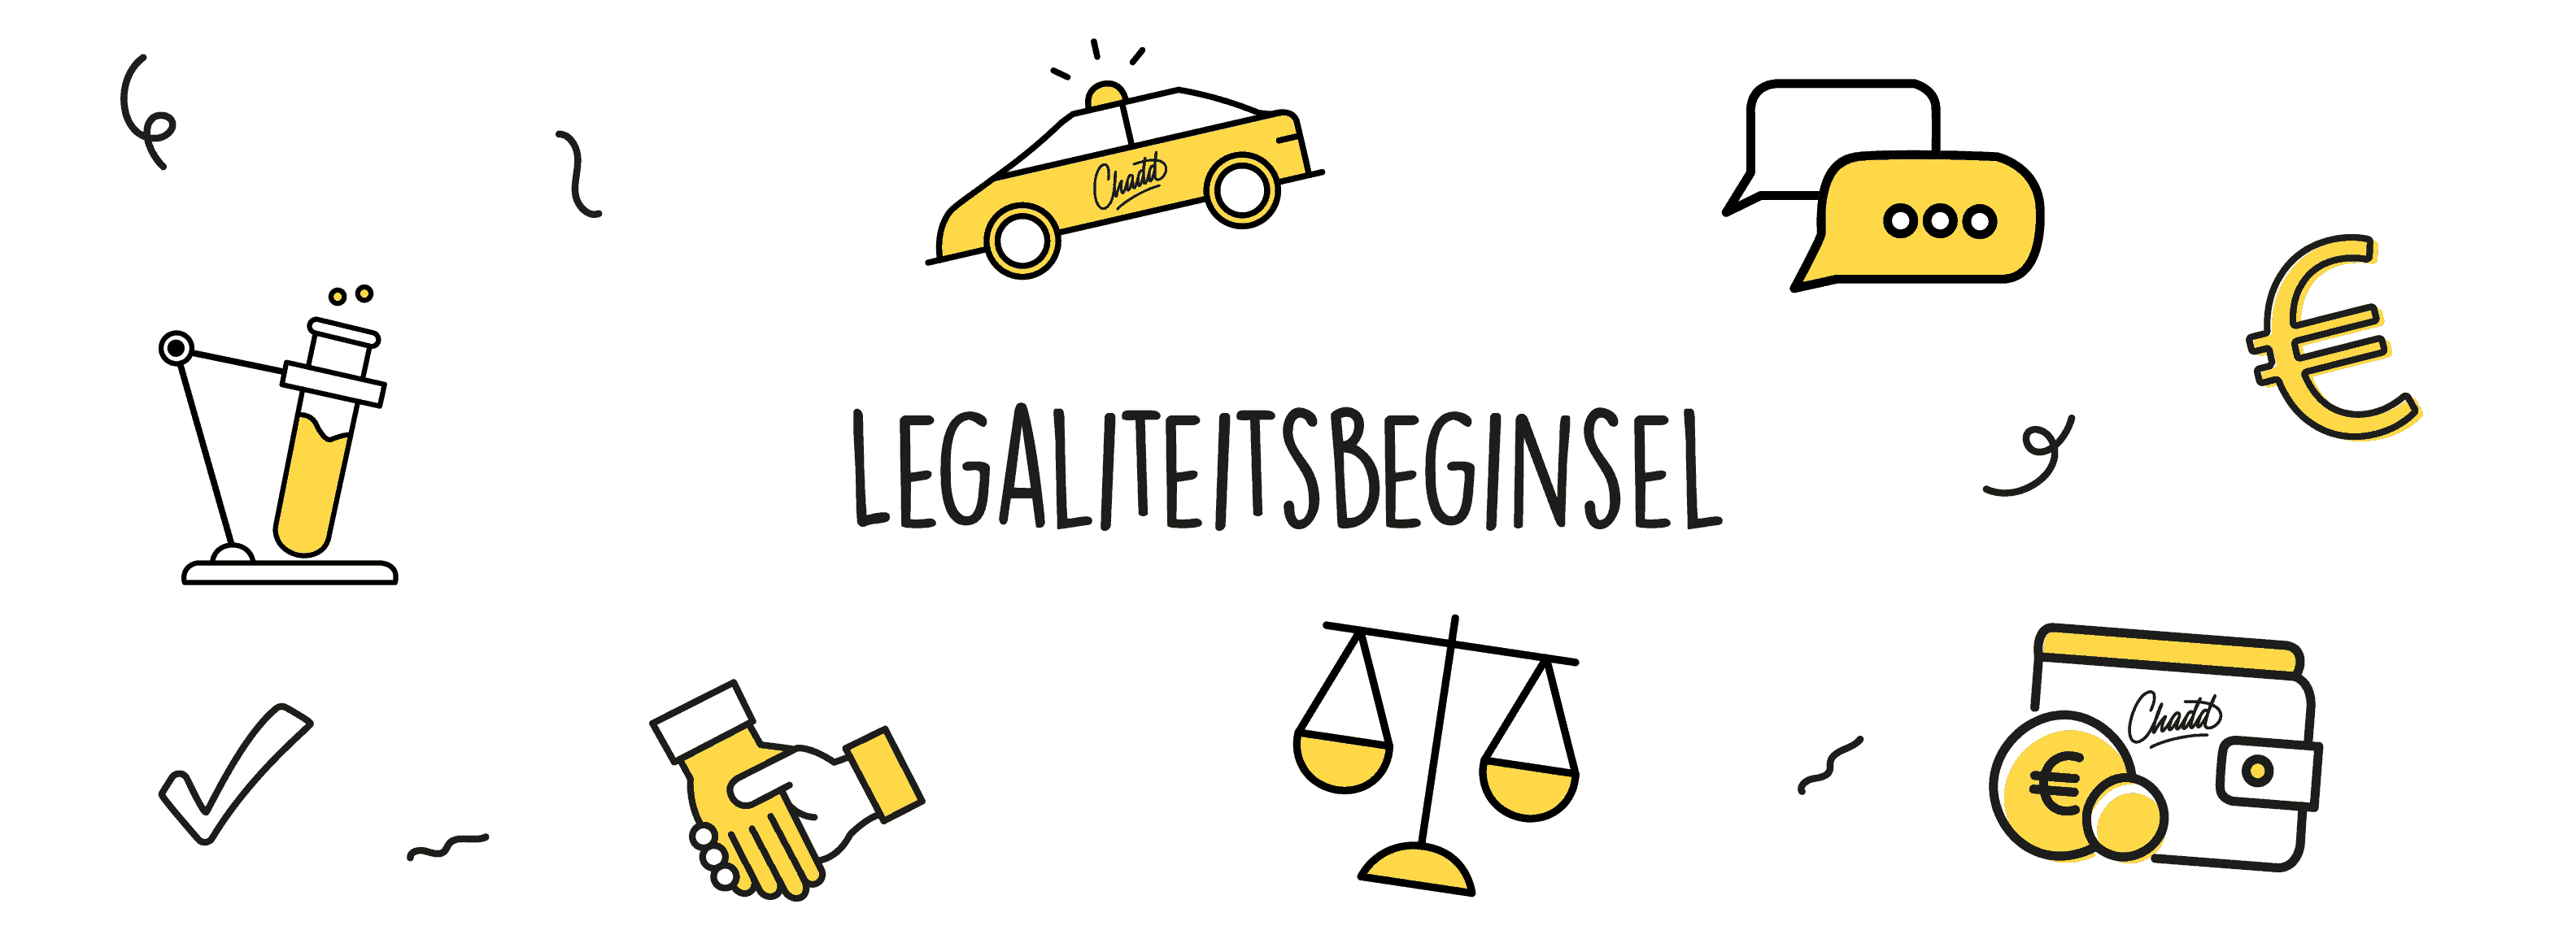 Legaliteitsbeginsel